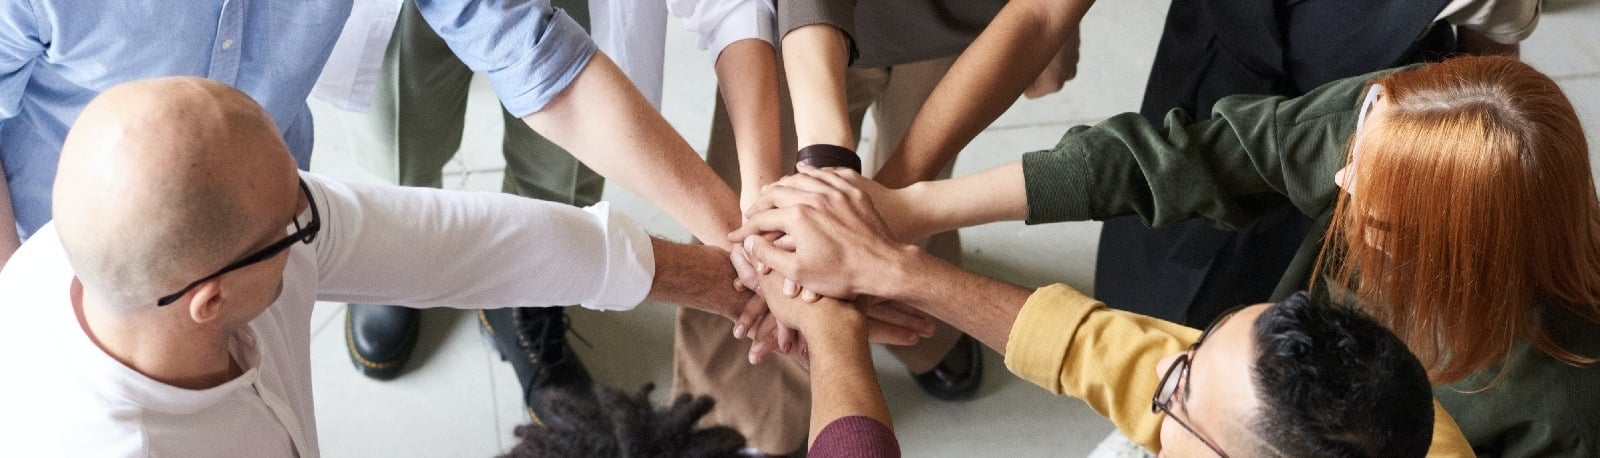 Team Communication: Effective Group Collaboration & Teamwork